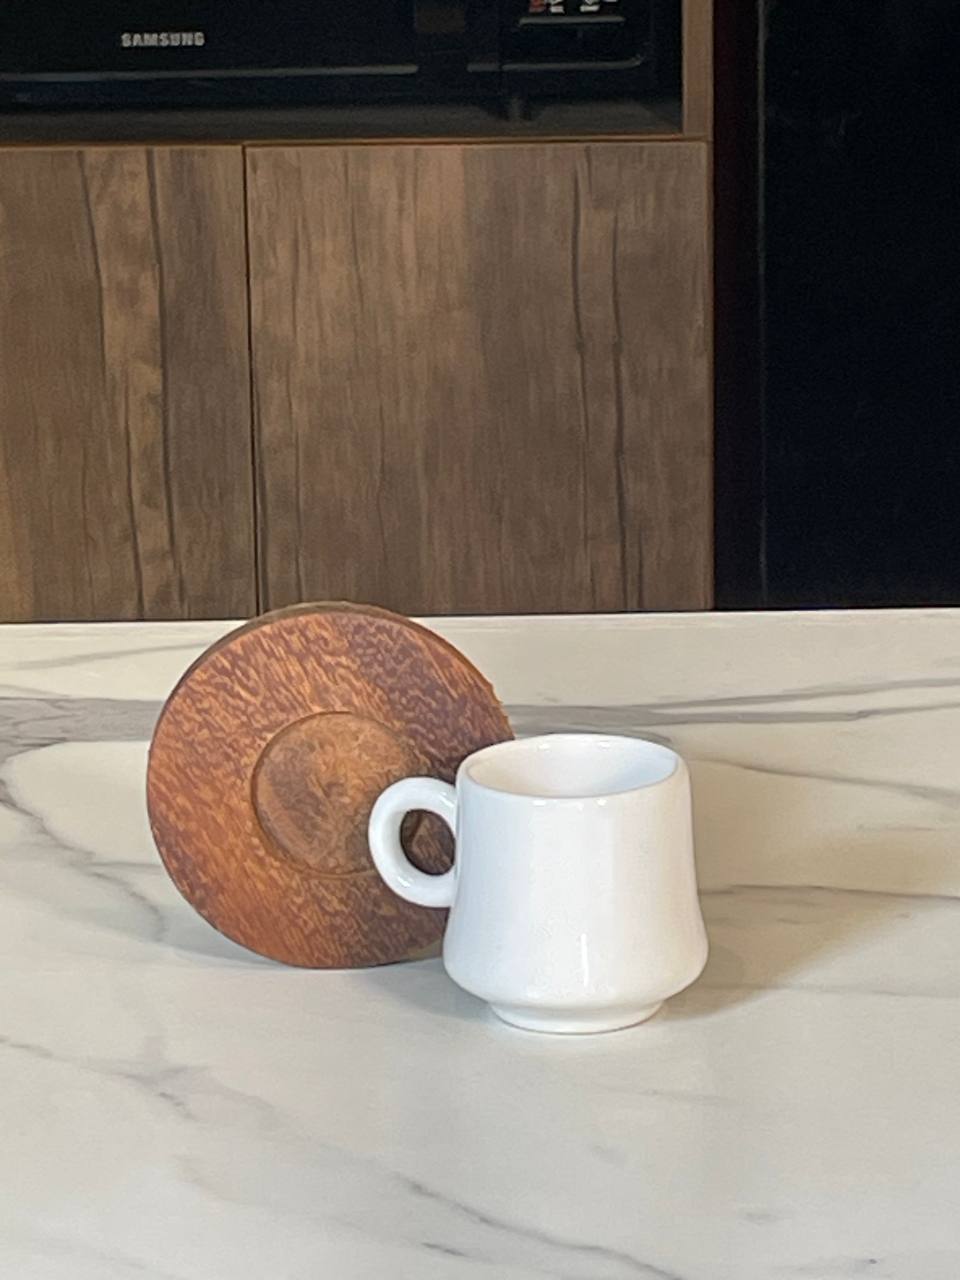 Ceramic Egg Coffee Cups 12 Pcs Set - White + Wood Coasters